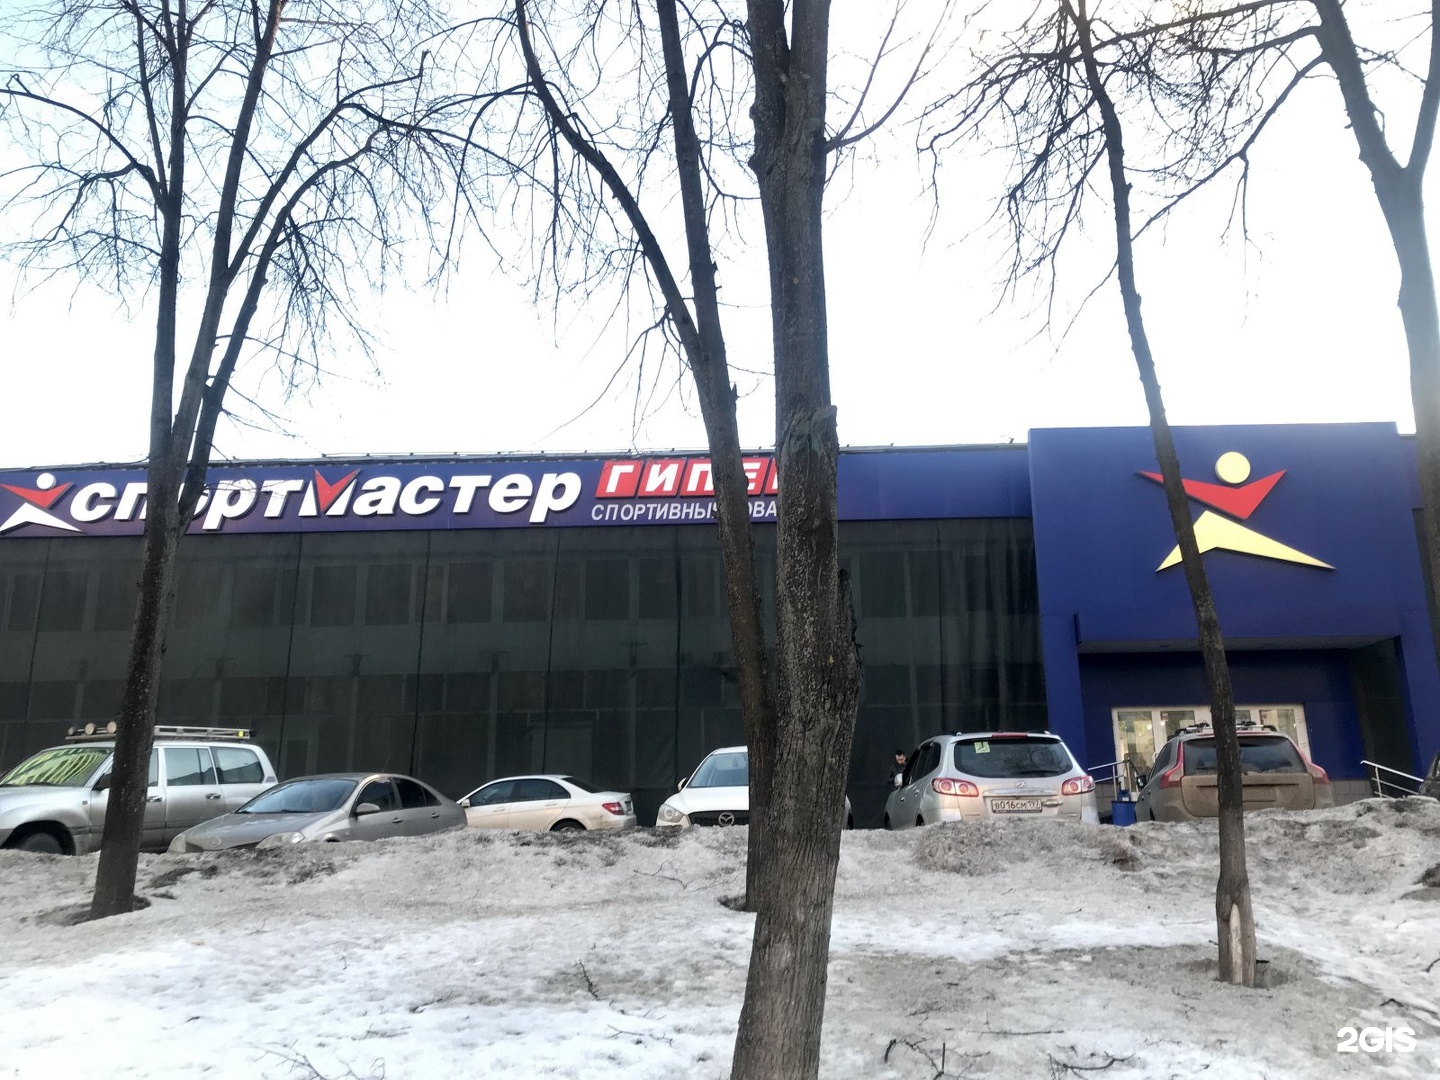 Спорт Мастер Каталог Магазин Горно Алтайск